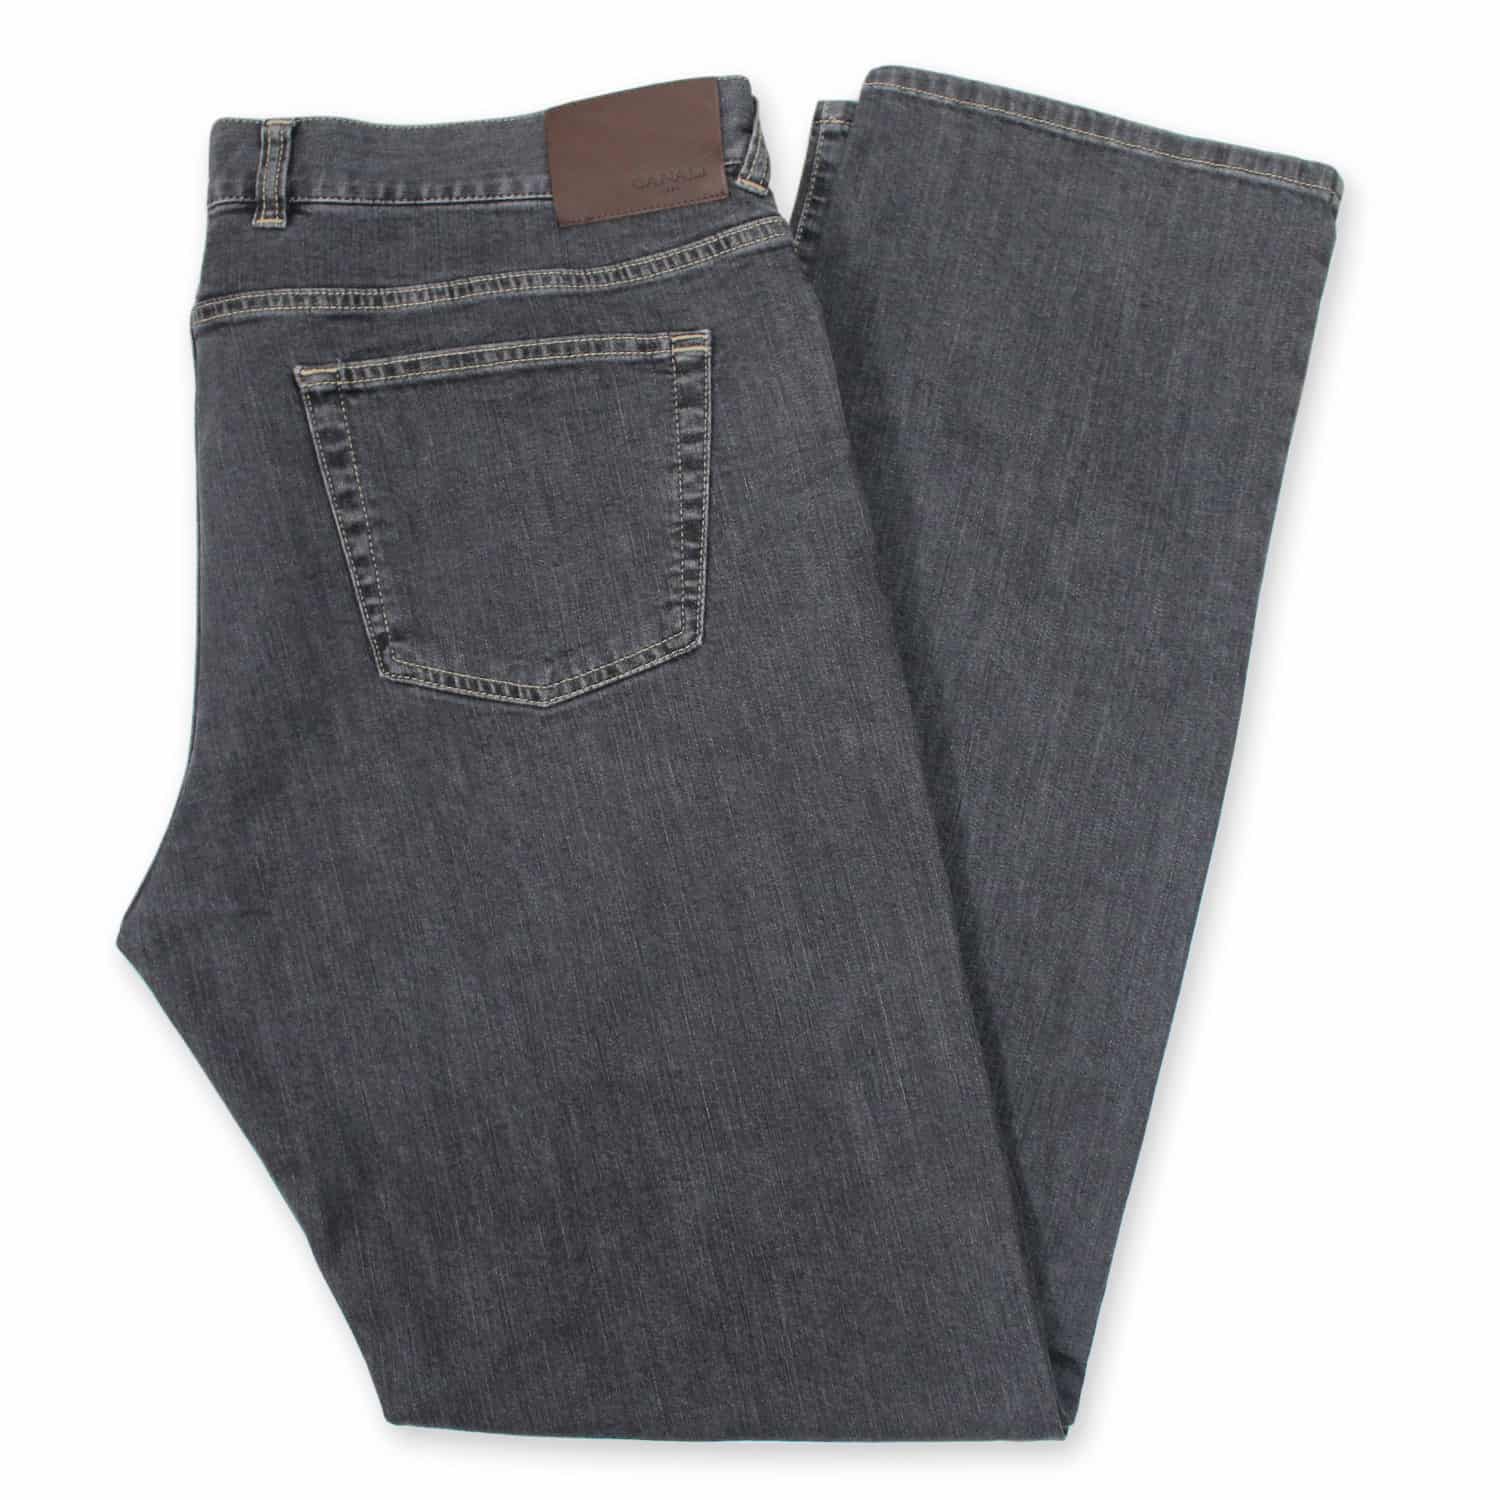 Canali Grey Washed Jeans – L'uomo Menswear